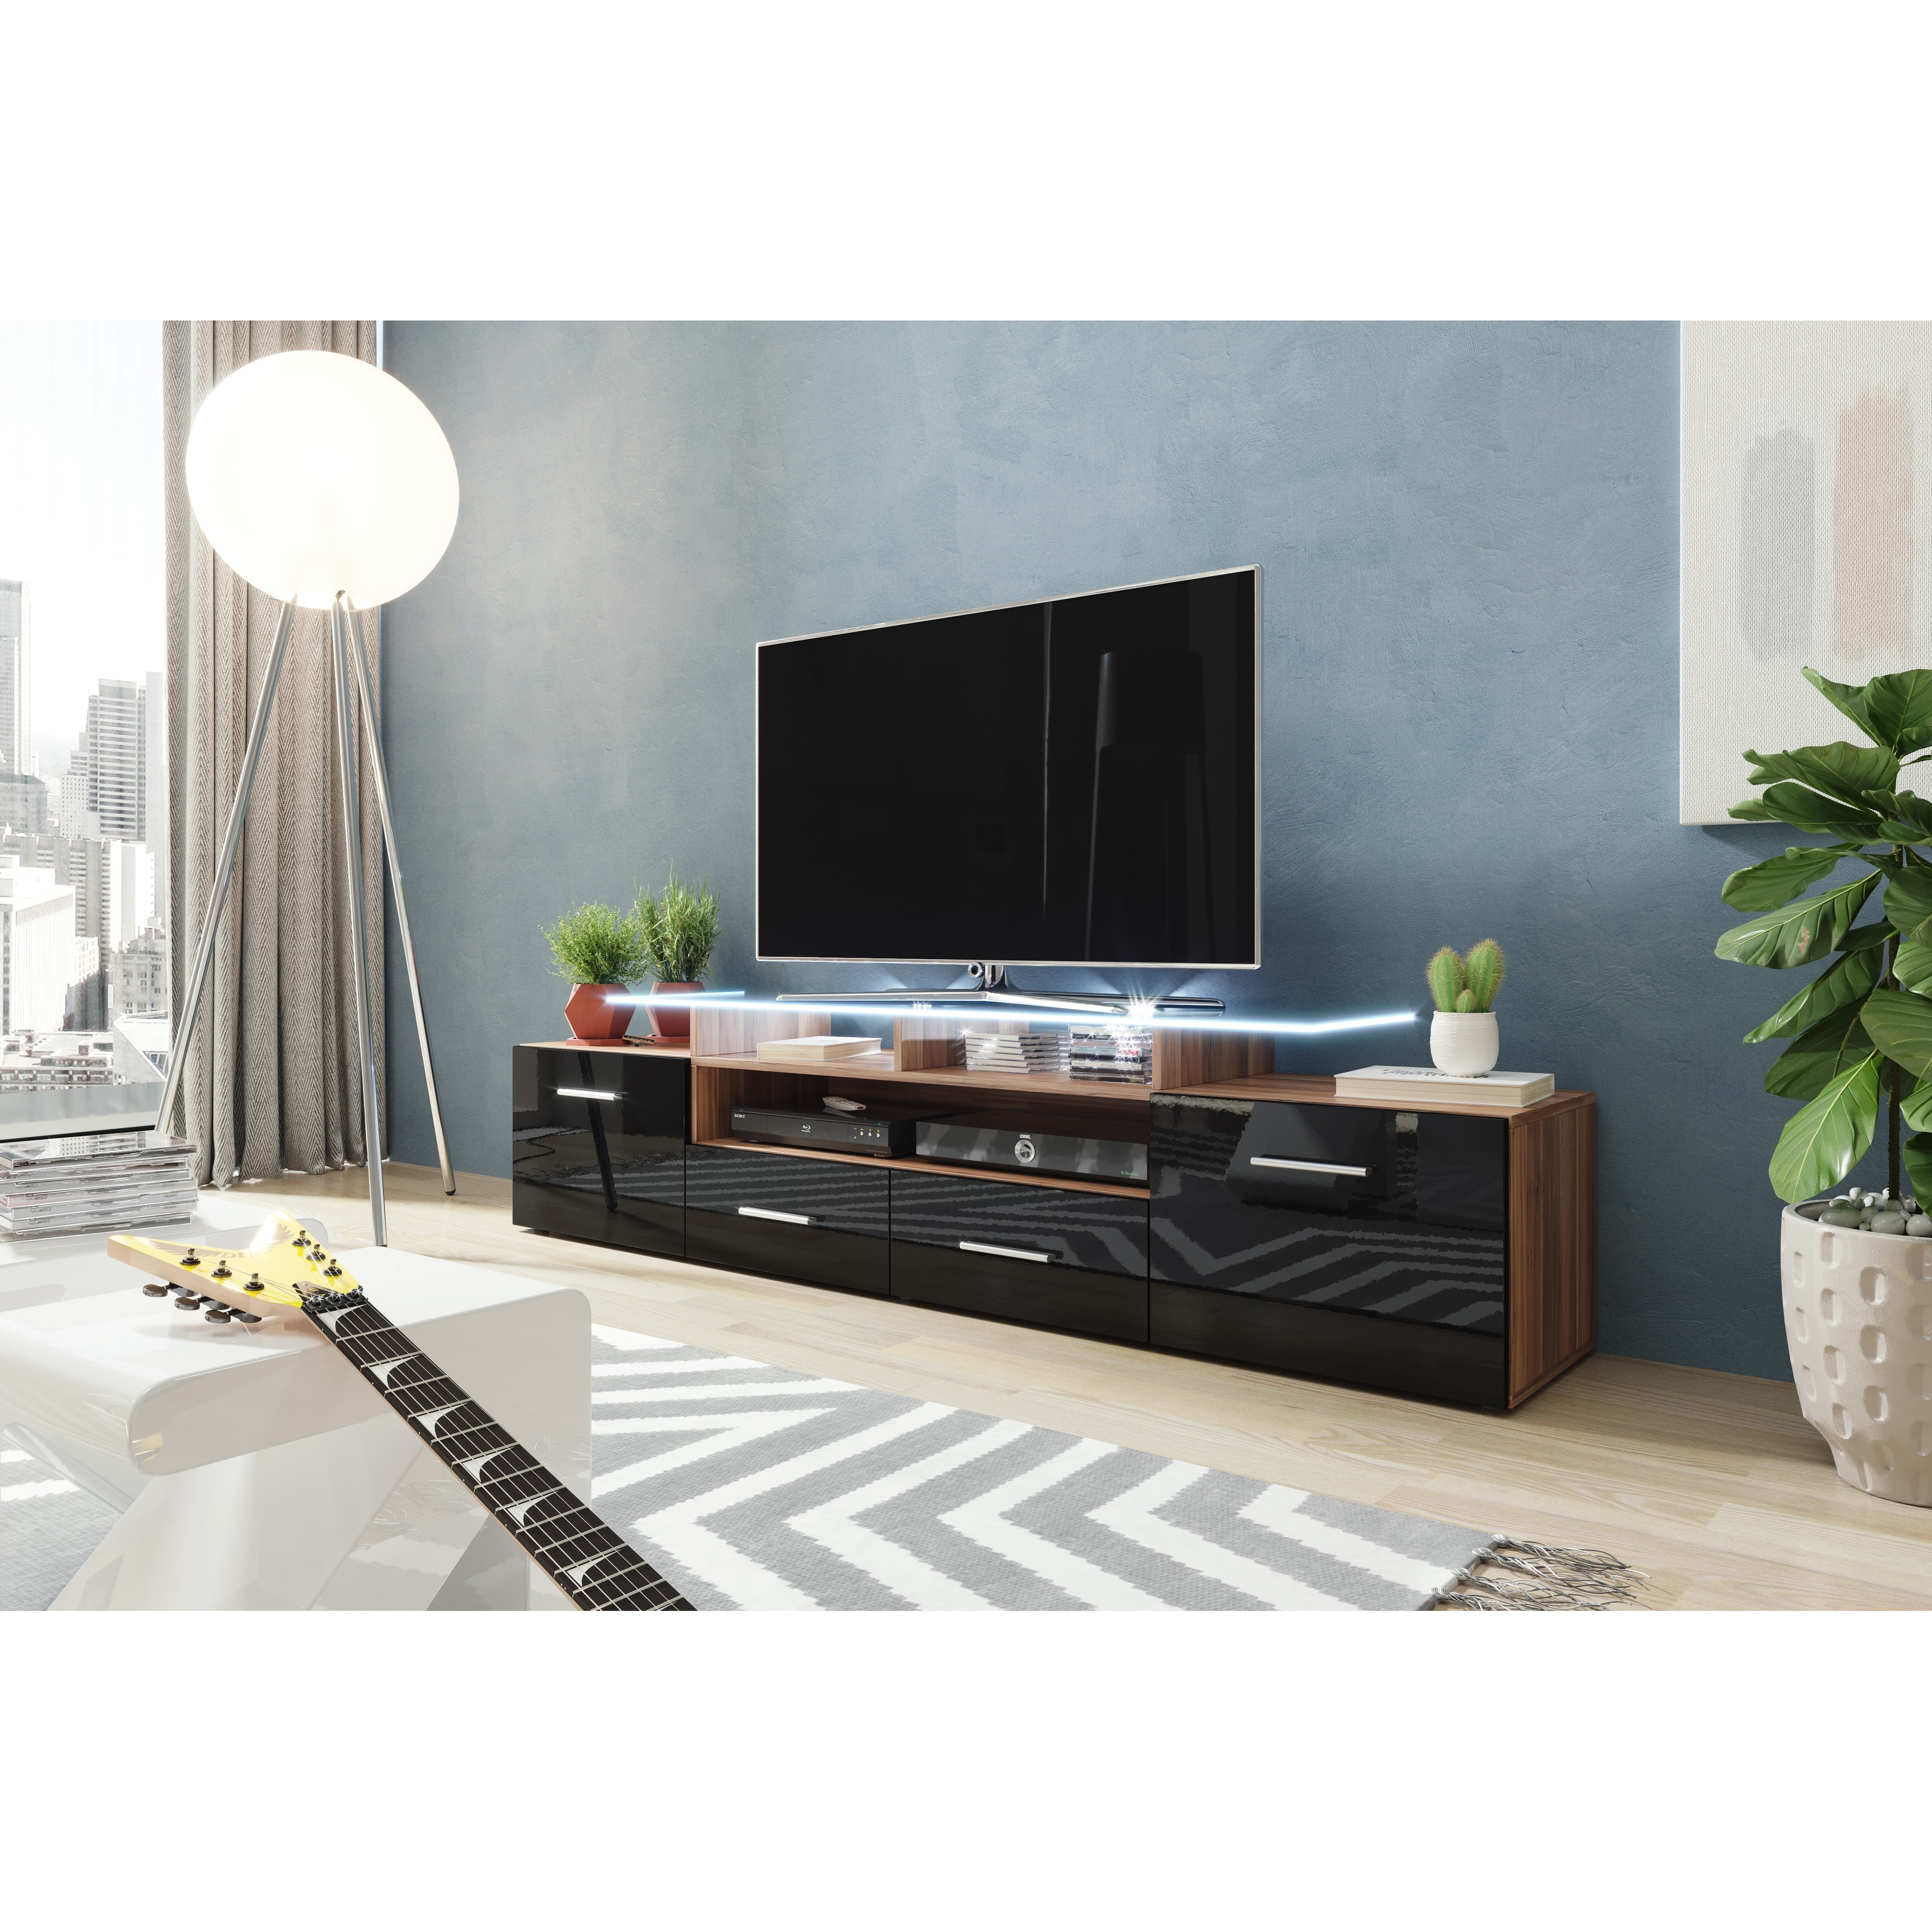 Everest Solid Oak Small Plasma TV Unit Entertainment cabinet with Drawer Shelf